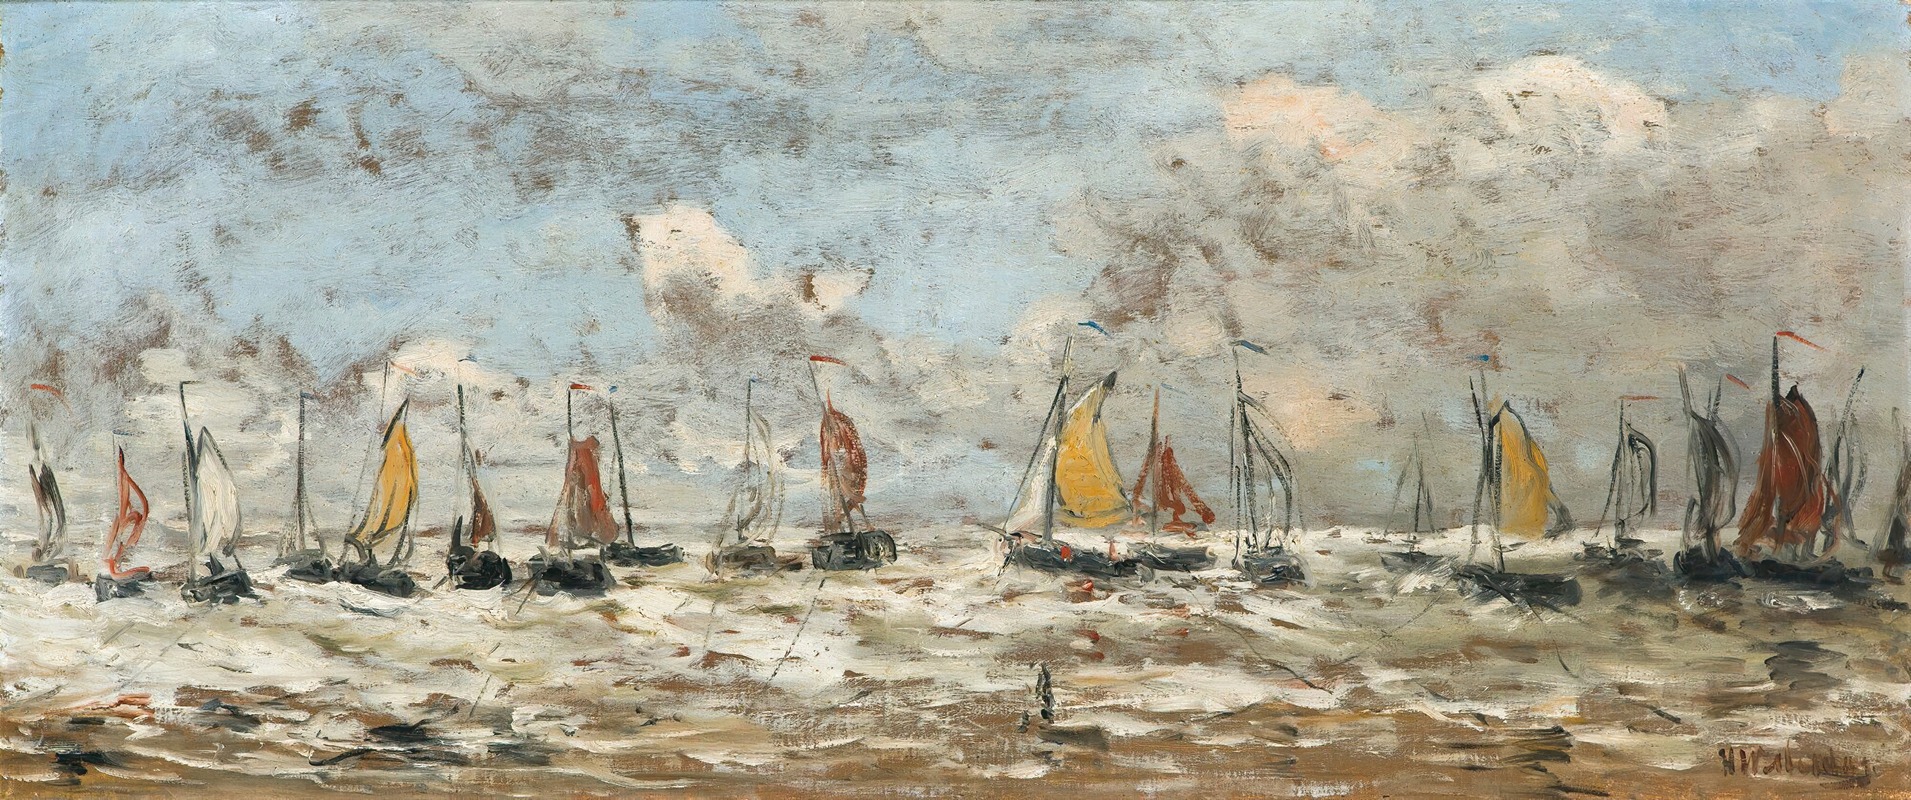 Hendrik Willem Mesdag - Fishing Fleet Off The Dutch Coast